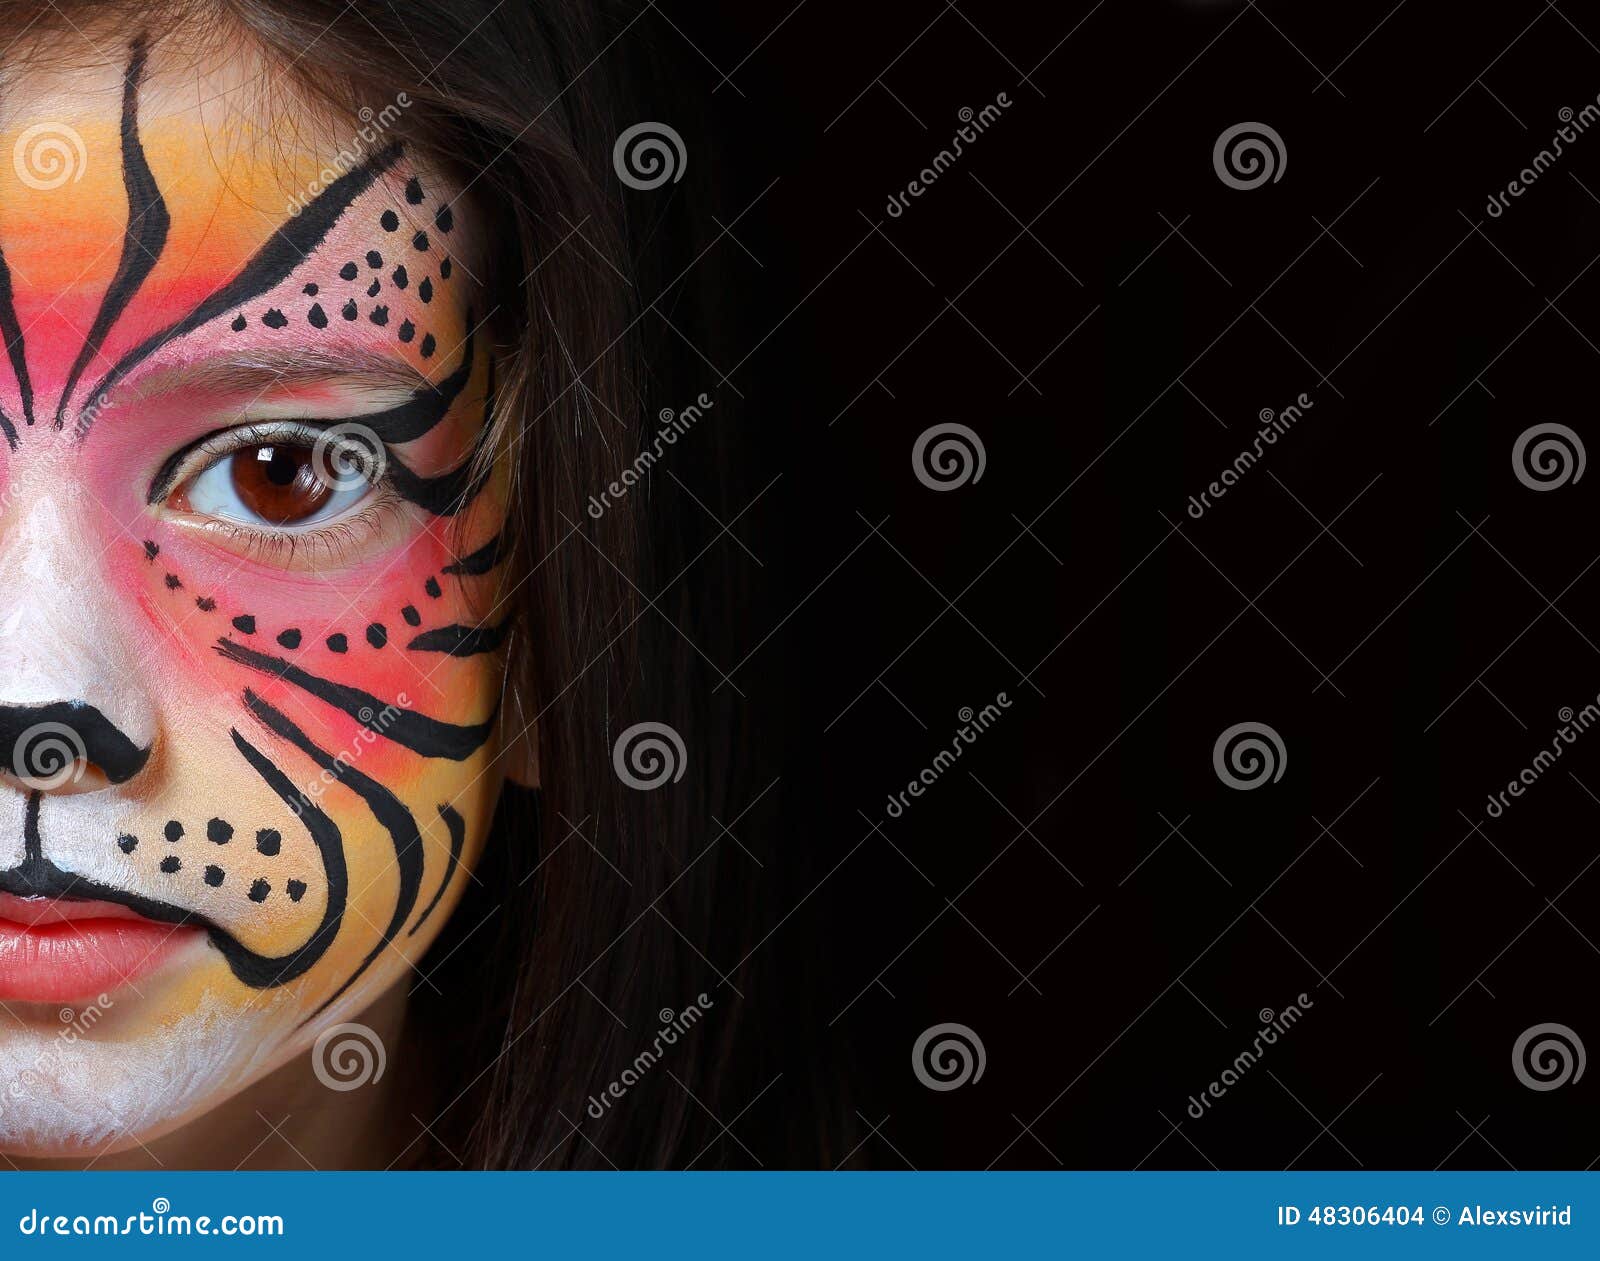 Tiger facepaint stock photo. Image of child, fashion - 48306404